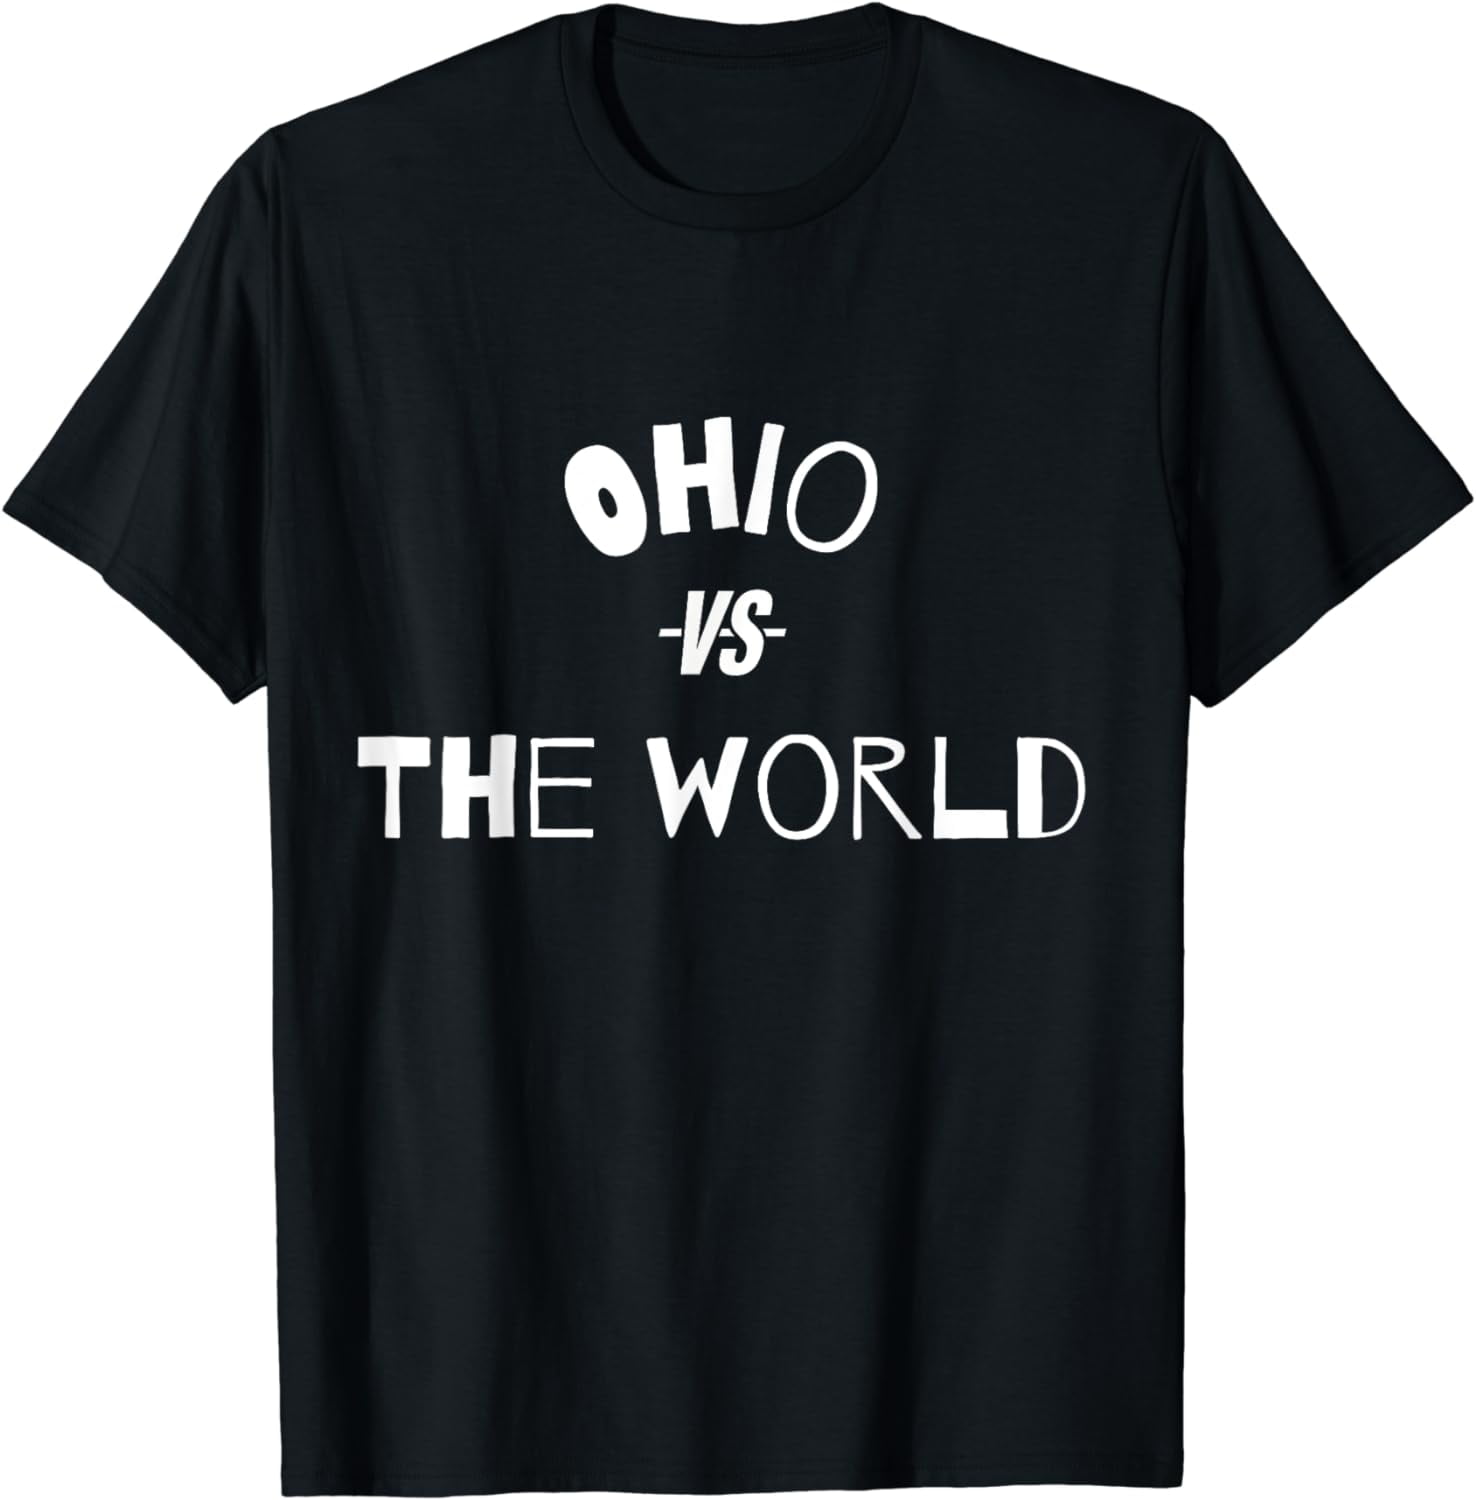 Ohio vs the World - funny Meme Design T-Shirt - Walmart.com